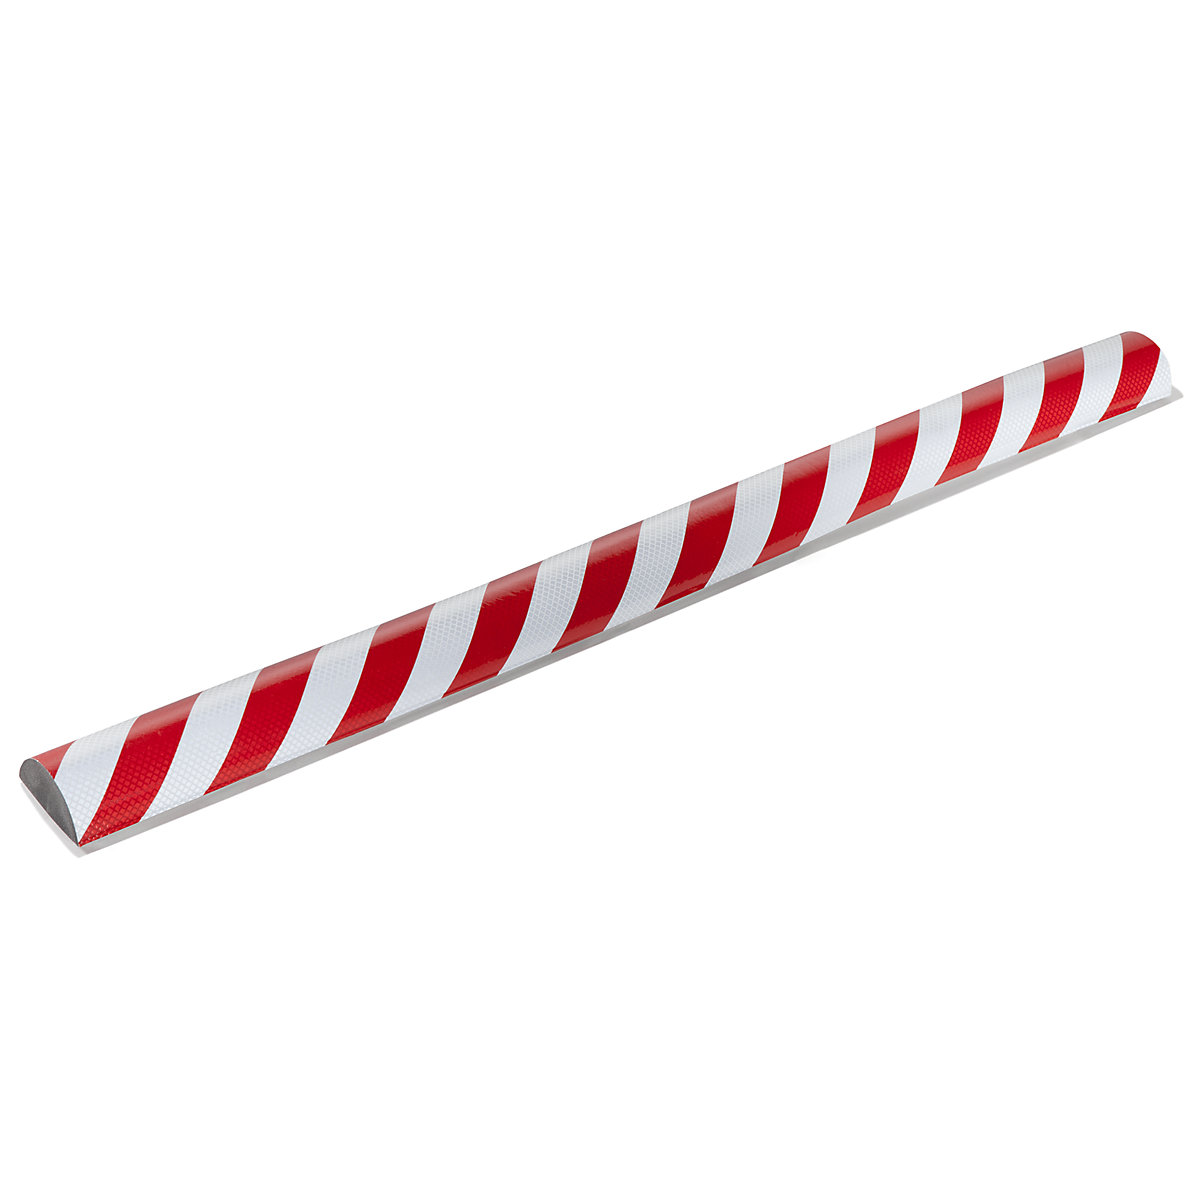 Knuffi®-oppervlaktebescherming – SHG, type C+, stuk van 1 m, rood/wit retroreflecterend-17